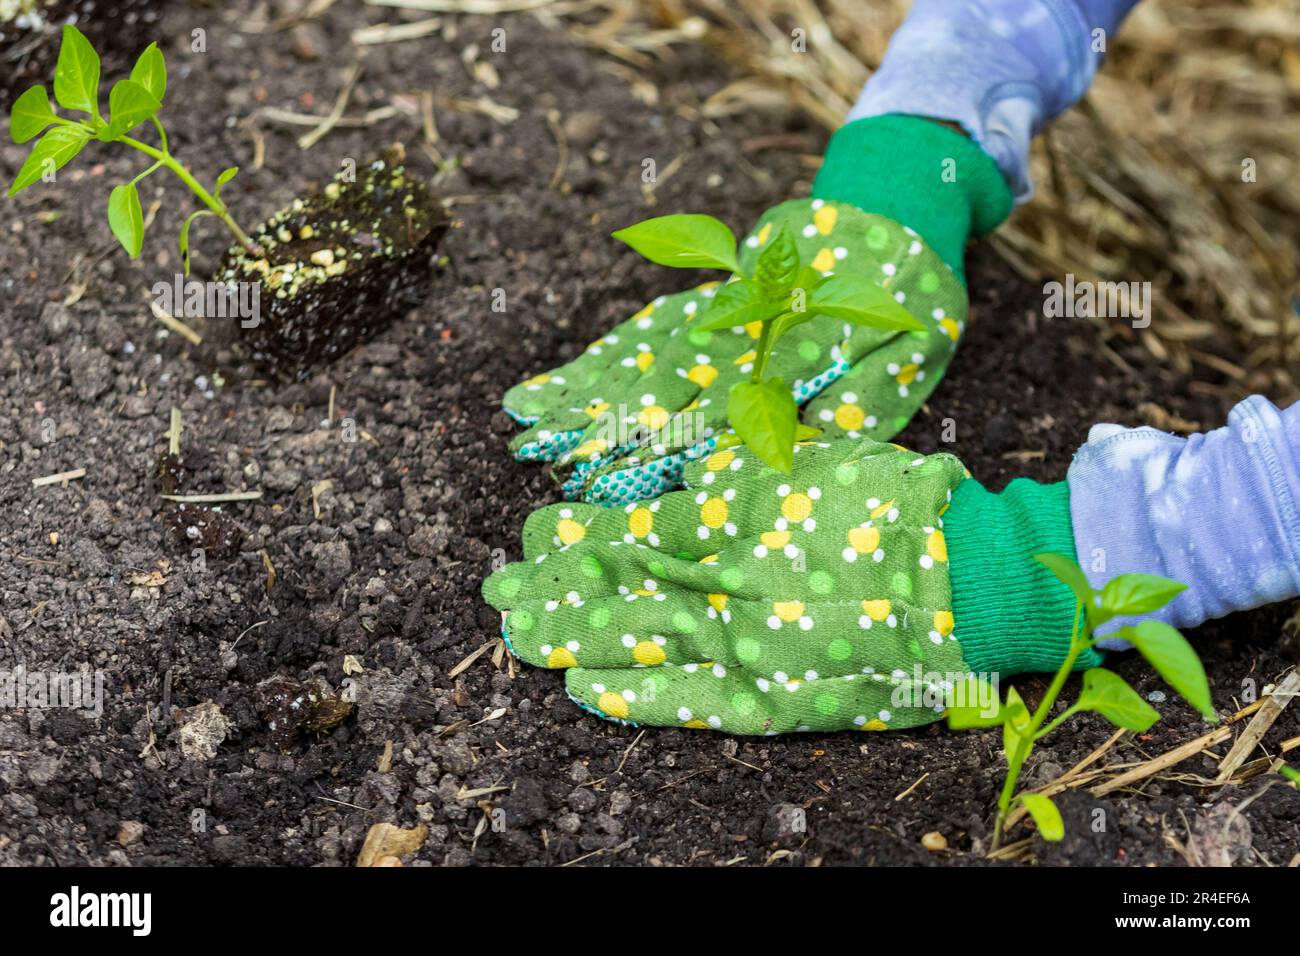 Hands planting new vegetables in garden soil. Stock Photo